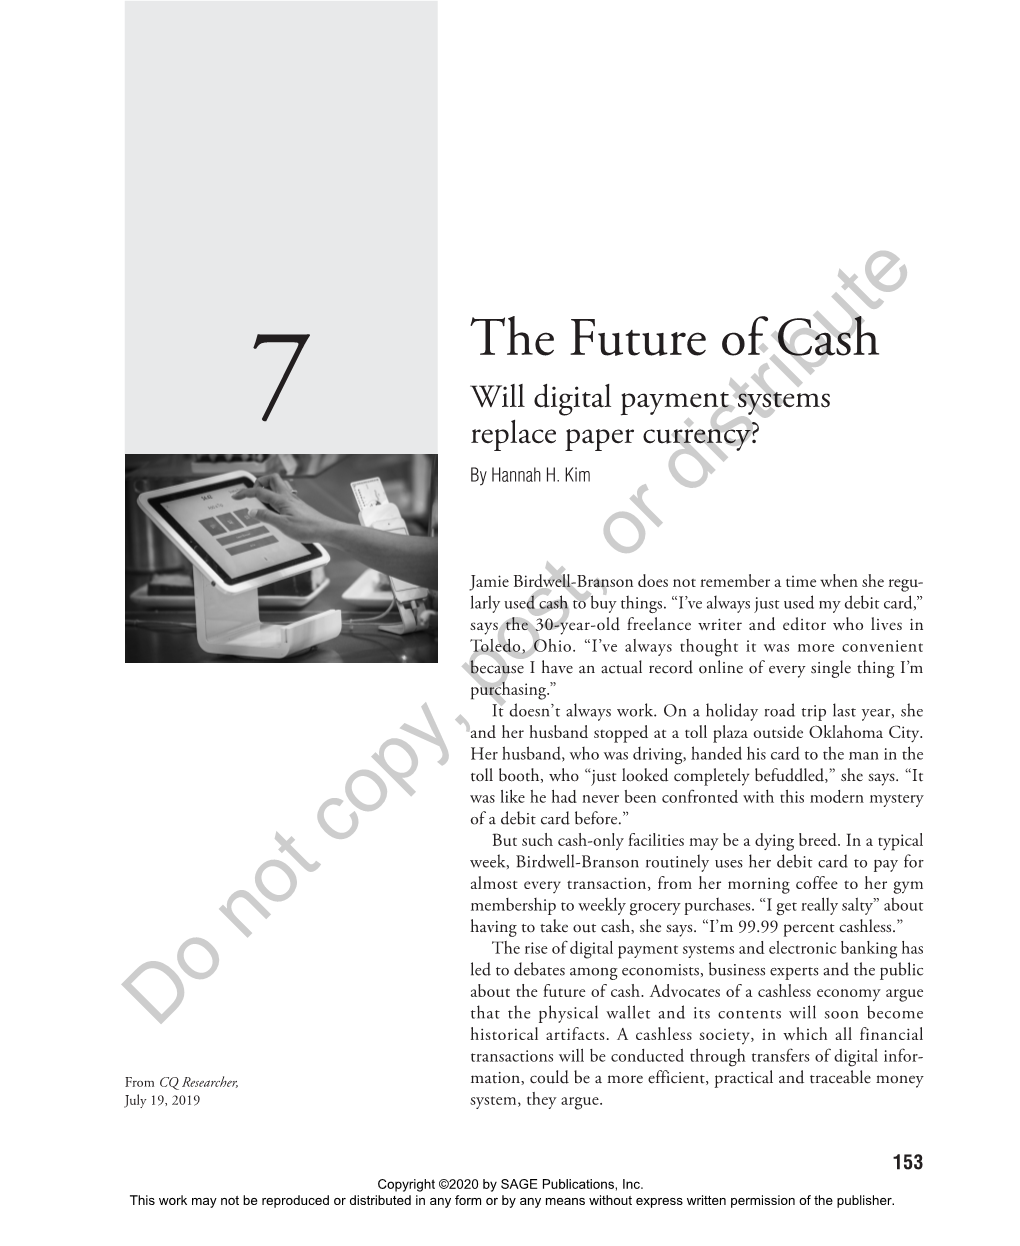 7 the Future of Cash